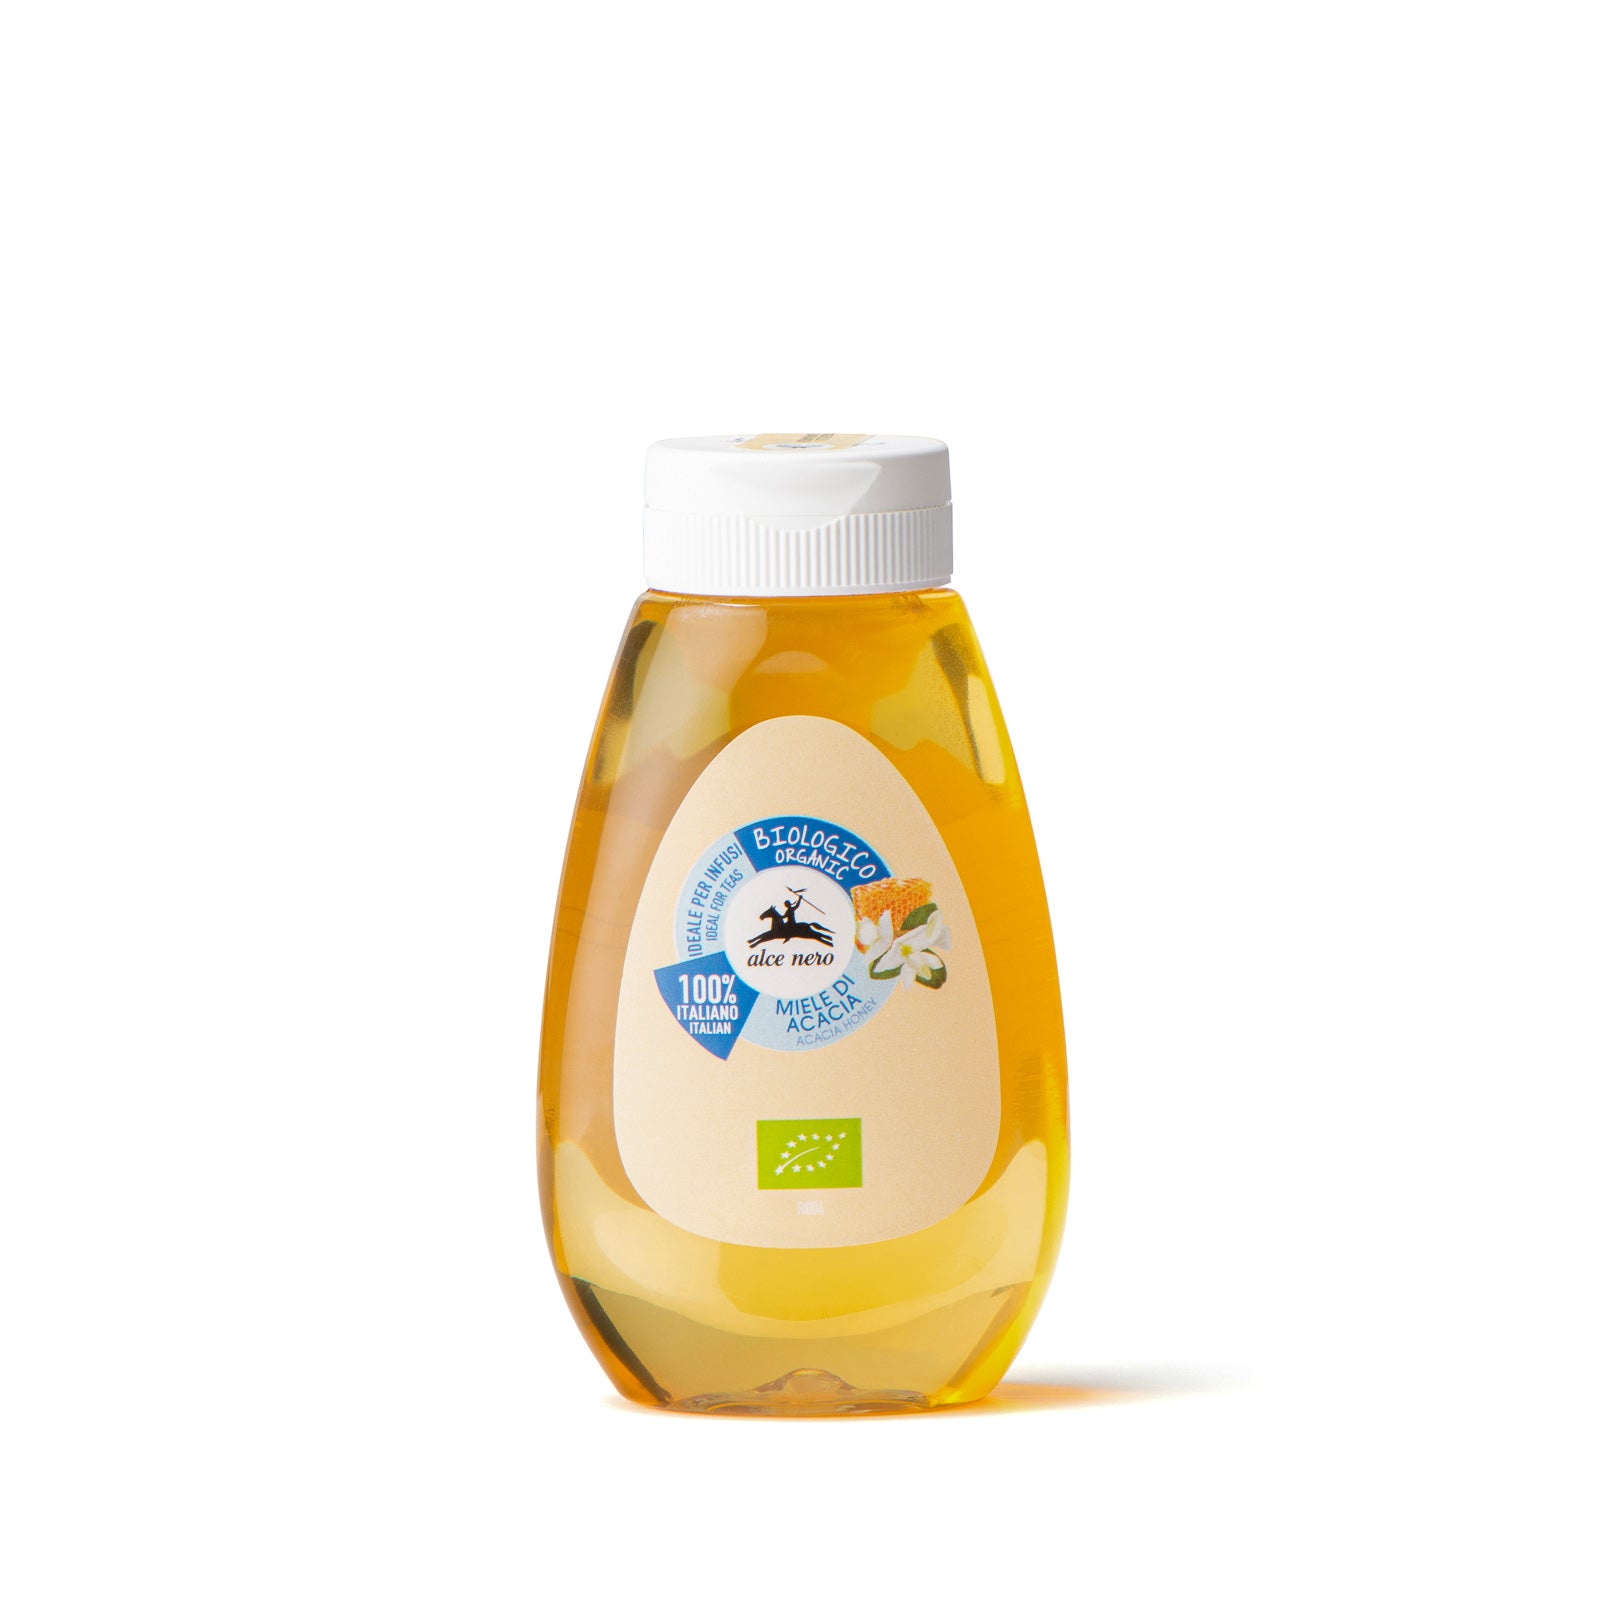 Miel de acacia ecológica con dosificador - MI401D